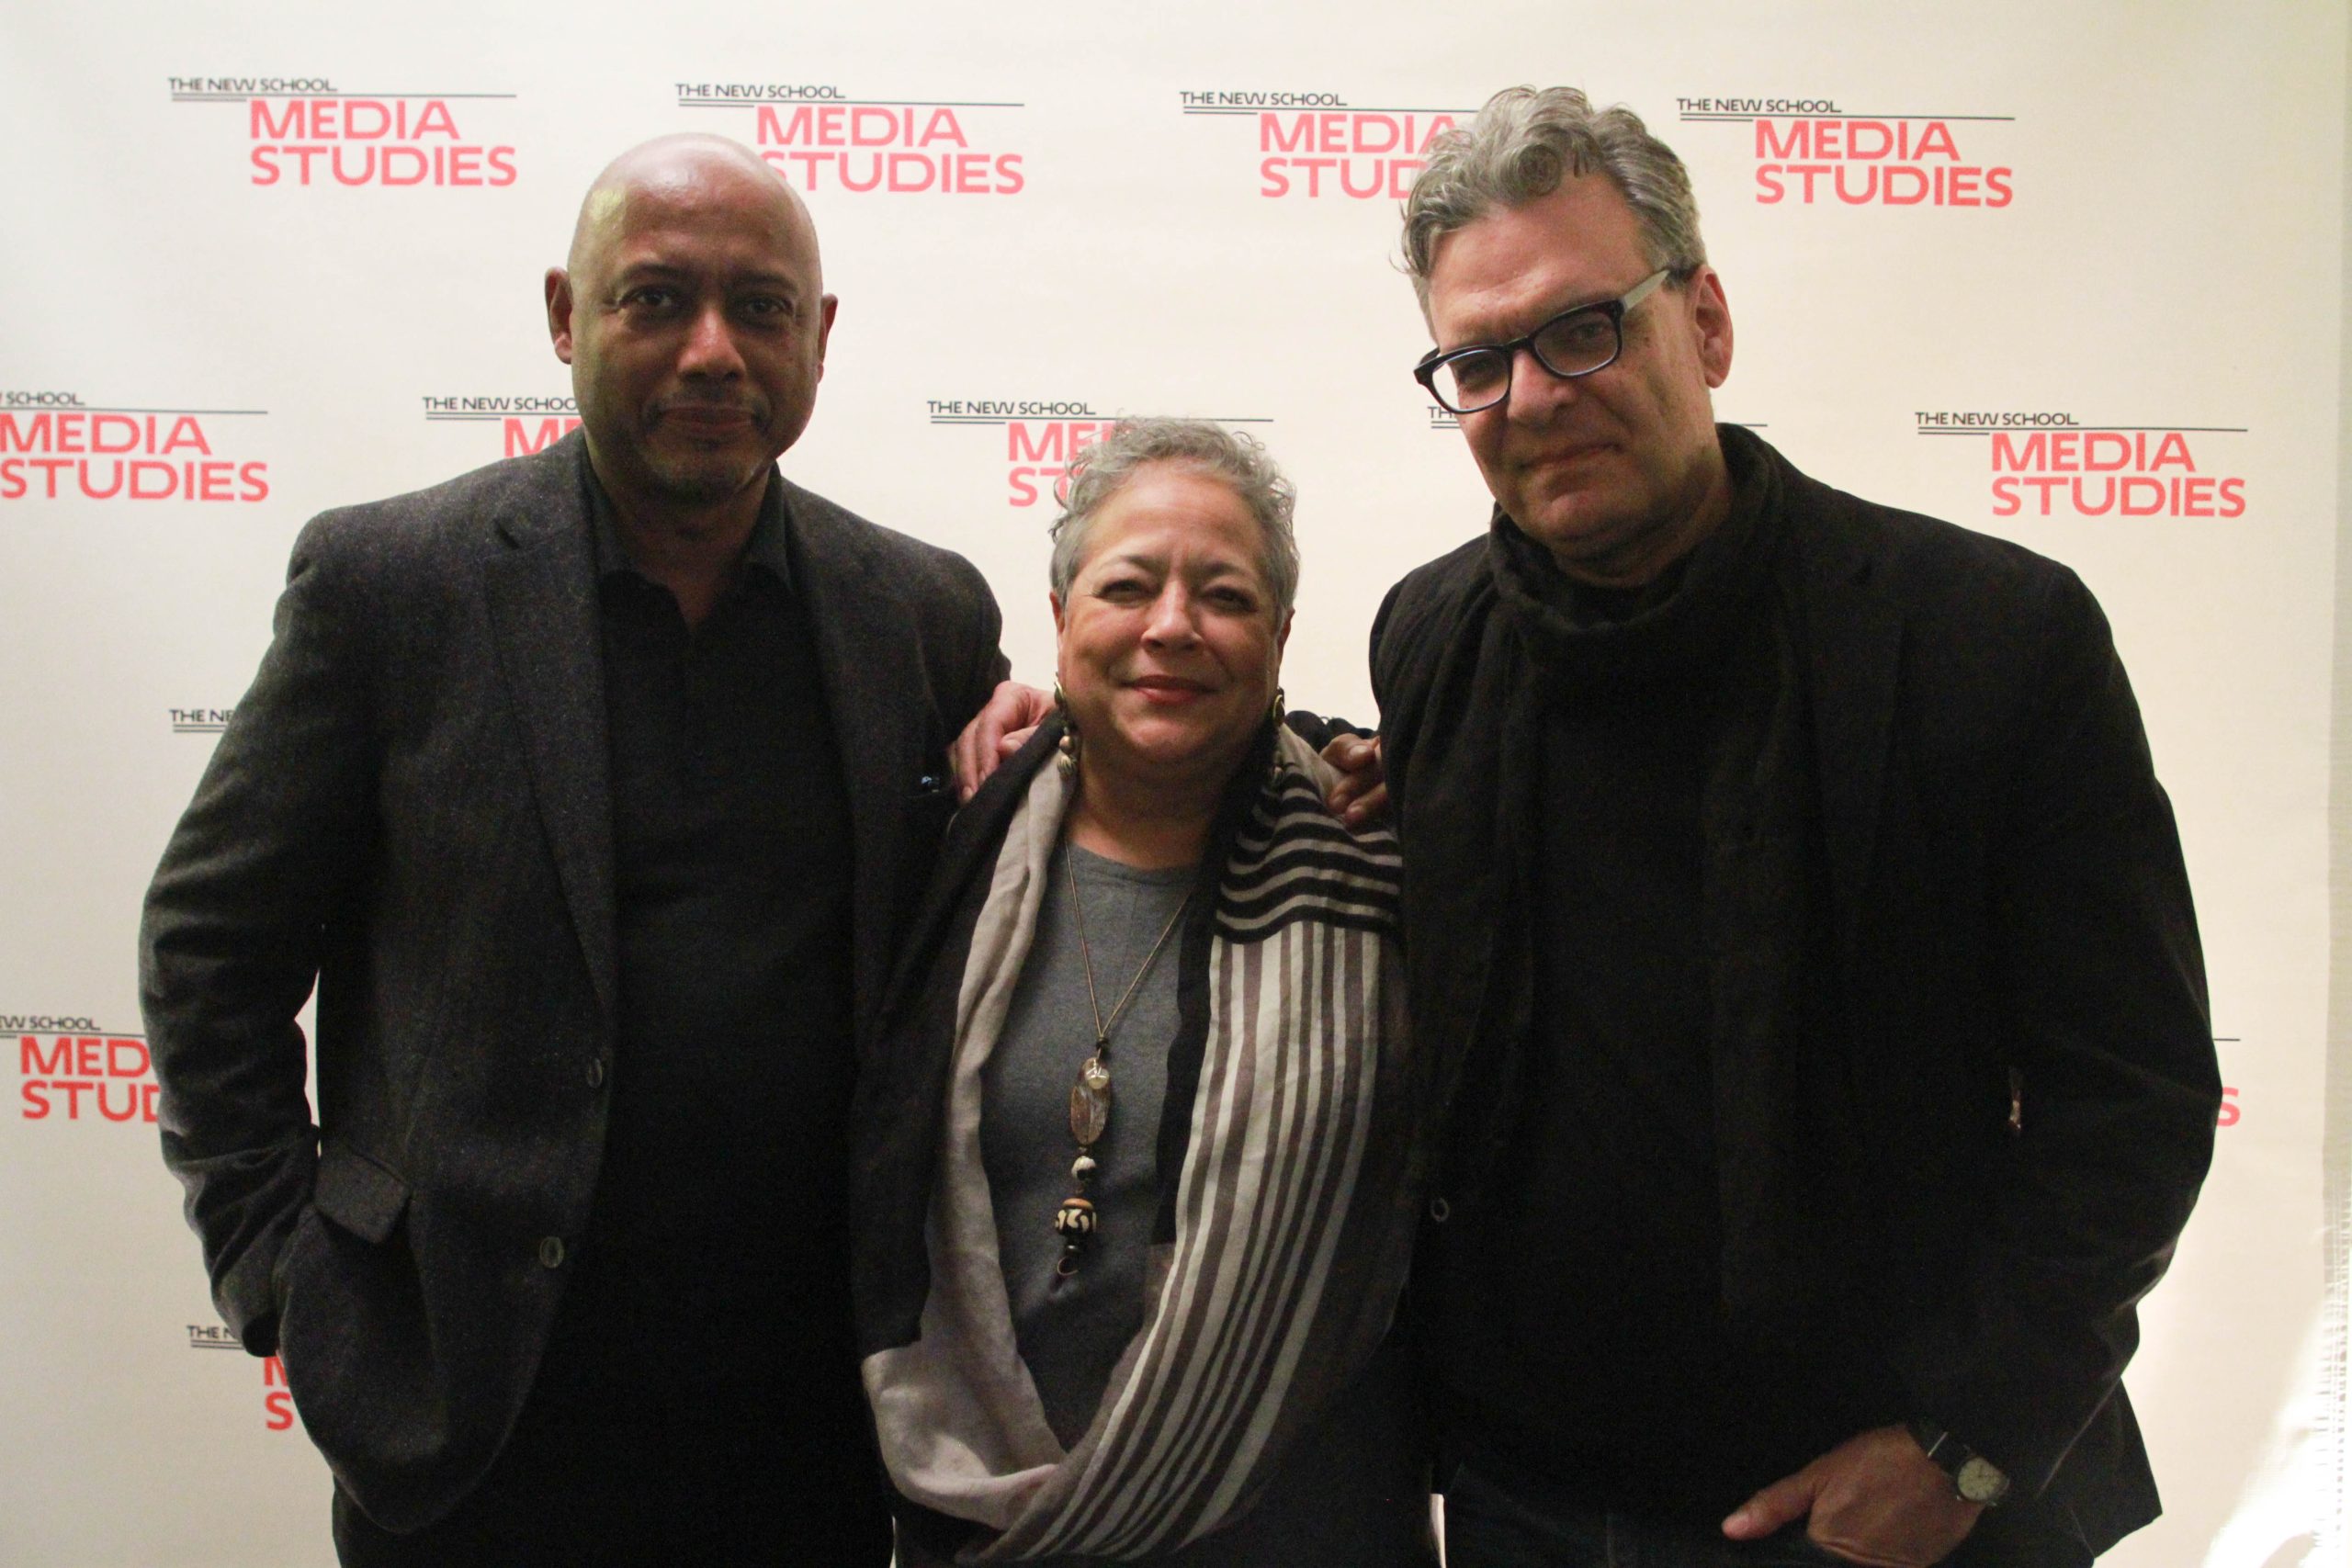 Michelle Materre (center)  with filmmaker Raoul Peck (left) and Vladan Nikolic, Dean, School of Media Studies 